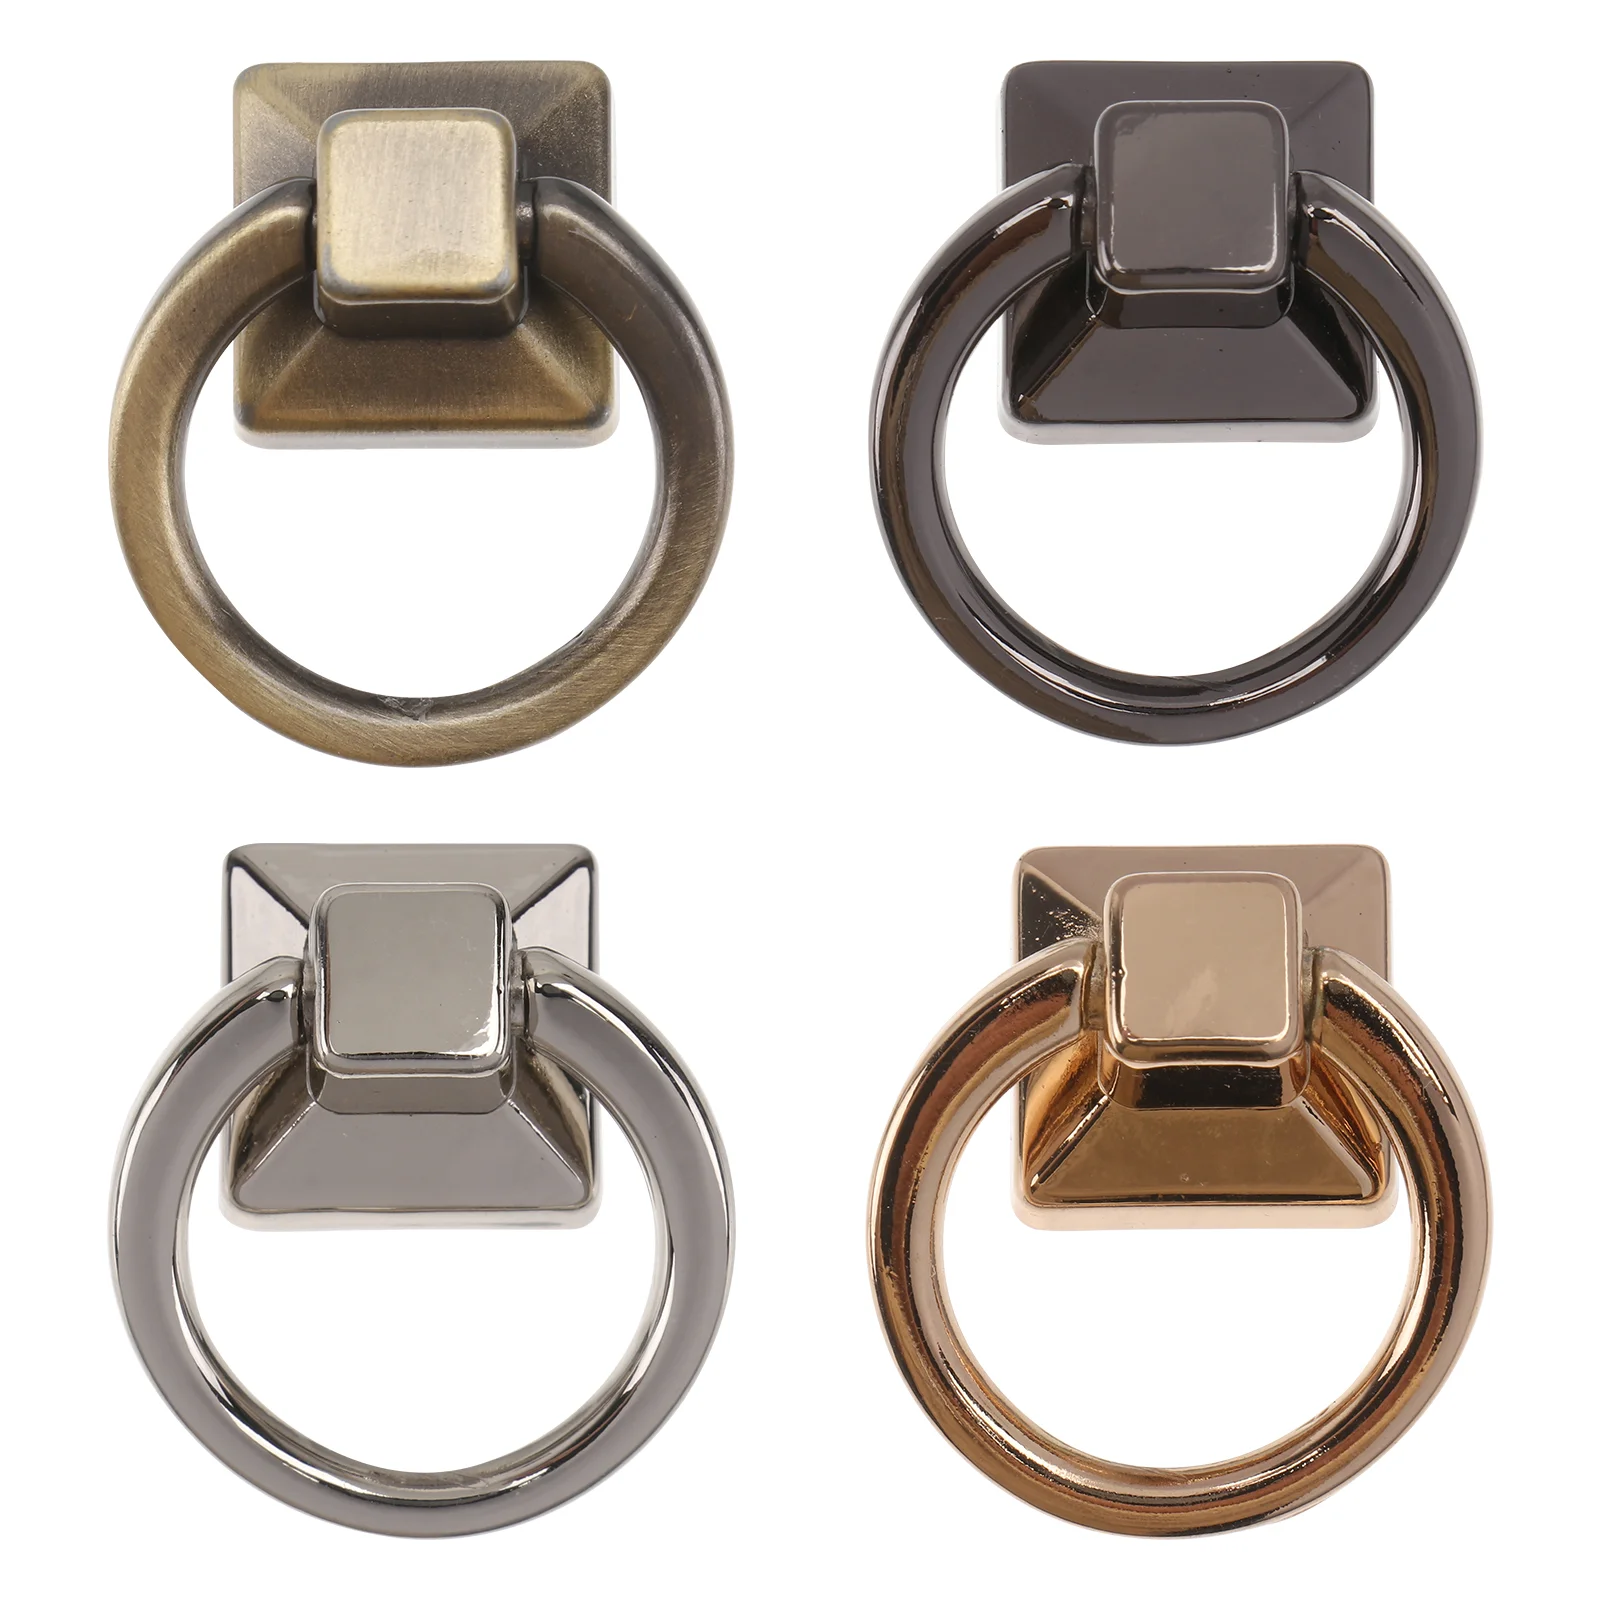 

Purse Buckle Chain Handbag Rotatable Ring Fasteners O Making Screw Locks Closure Conchos Accessories Clips Buckles Handle Strap